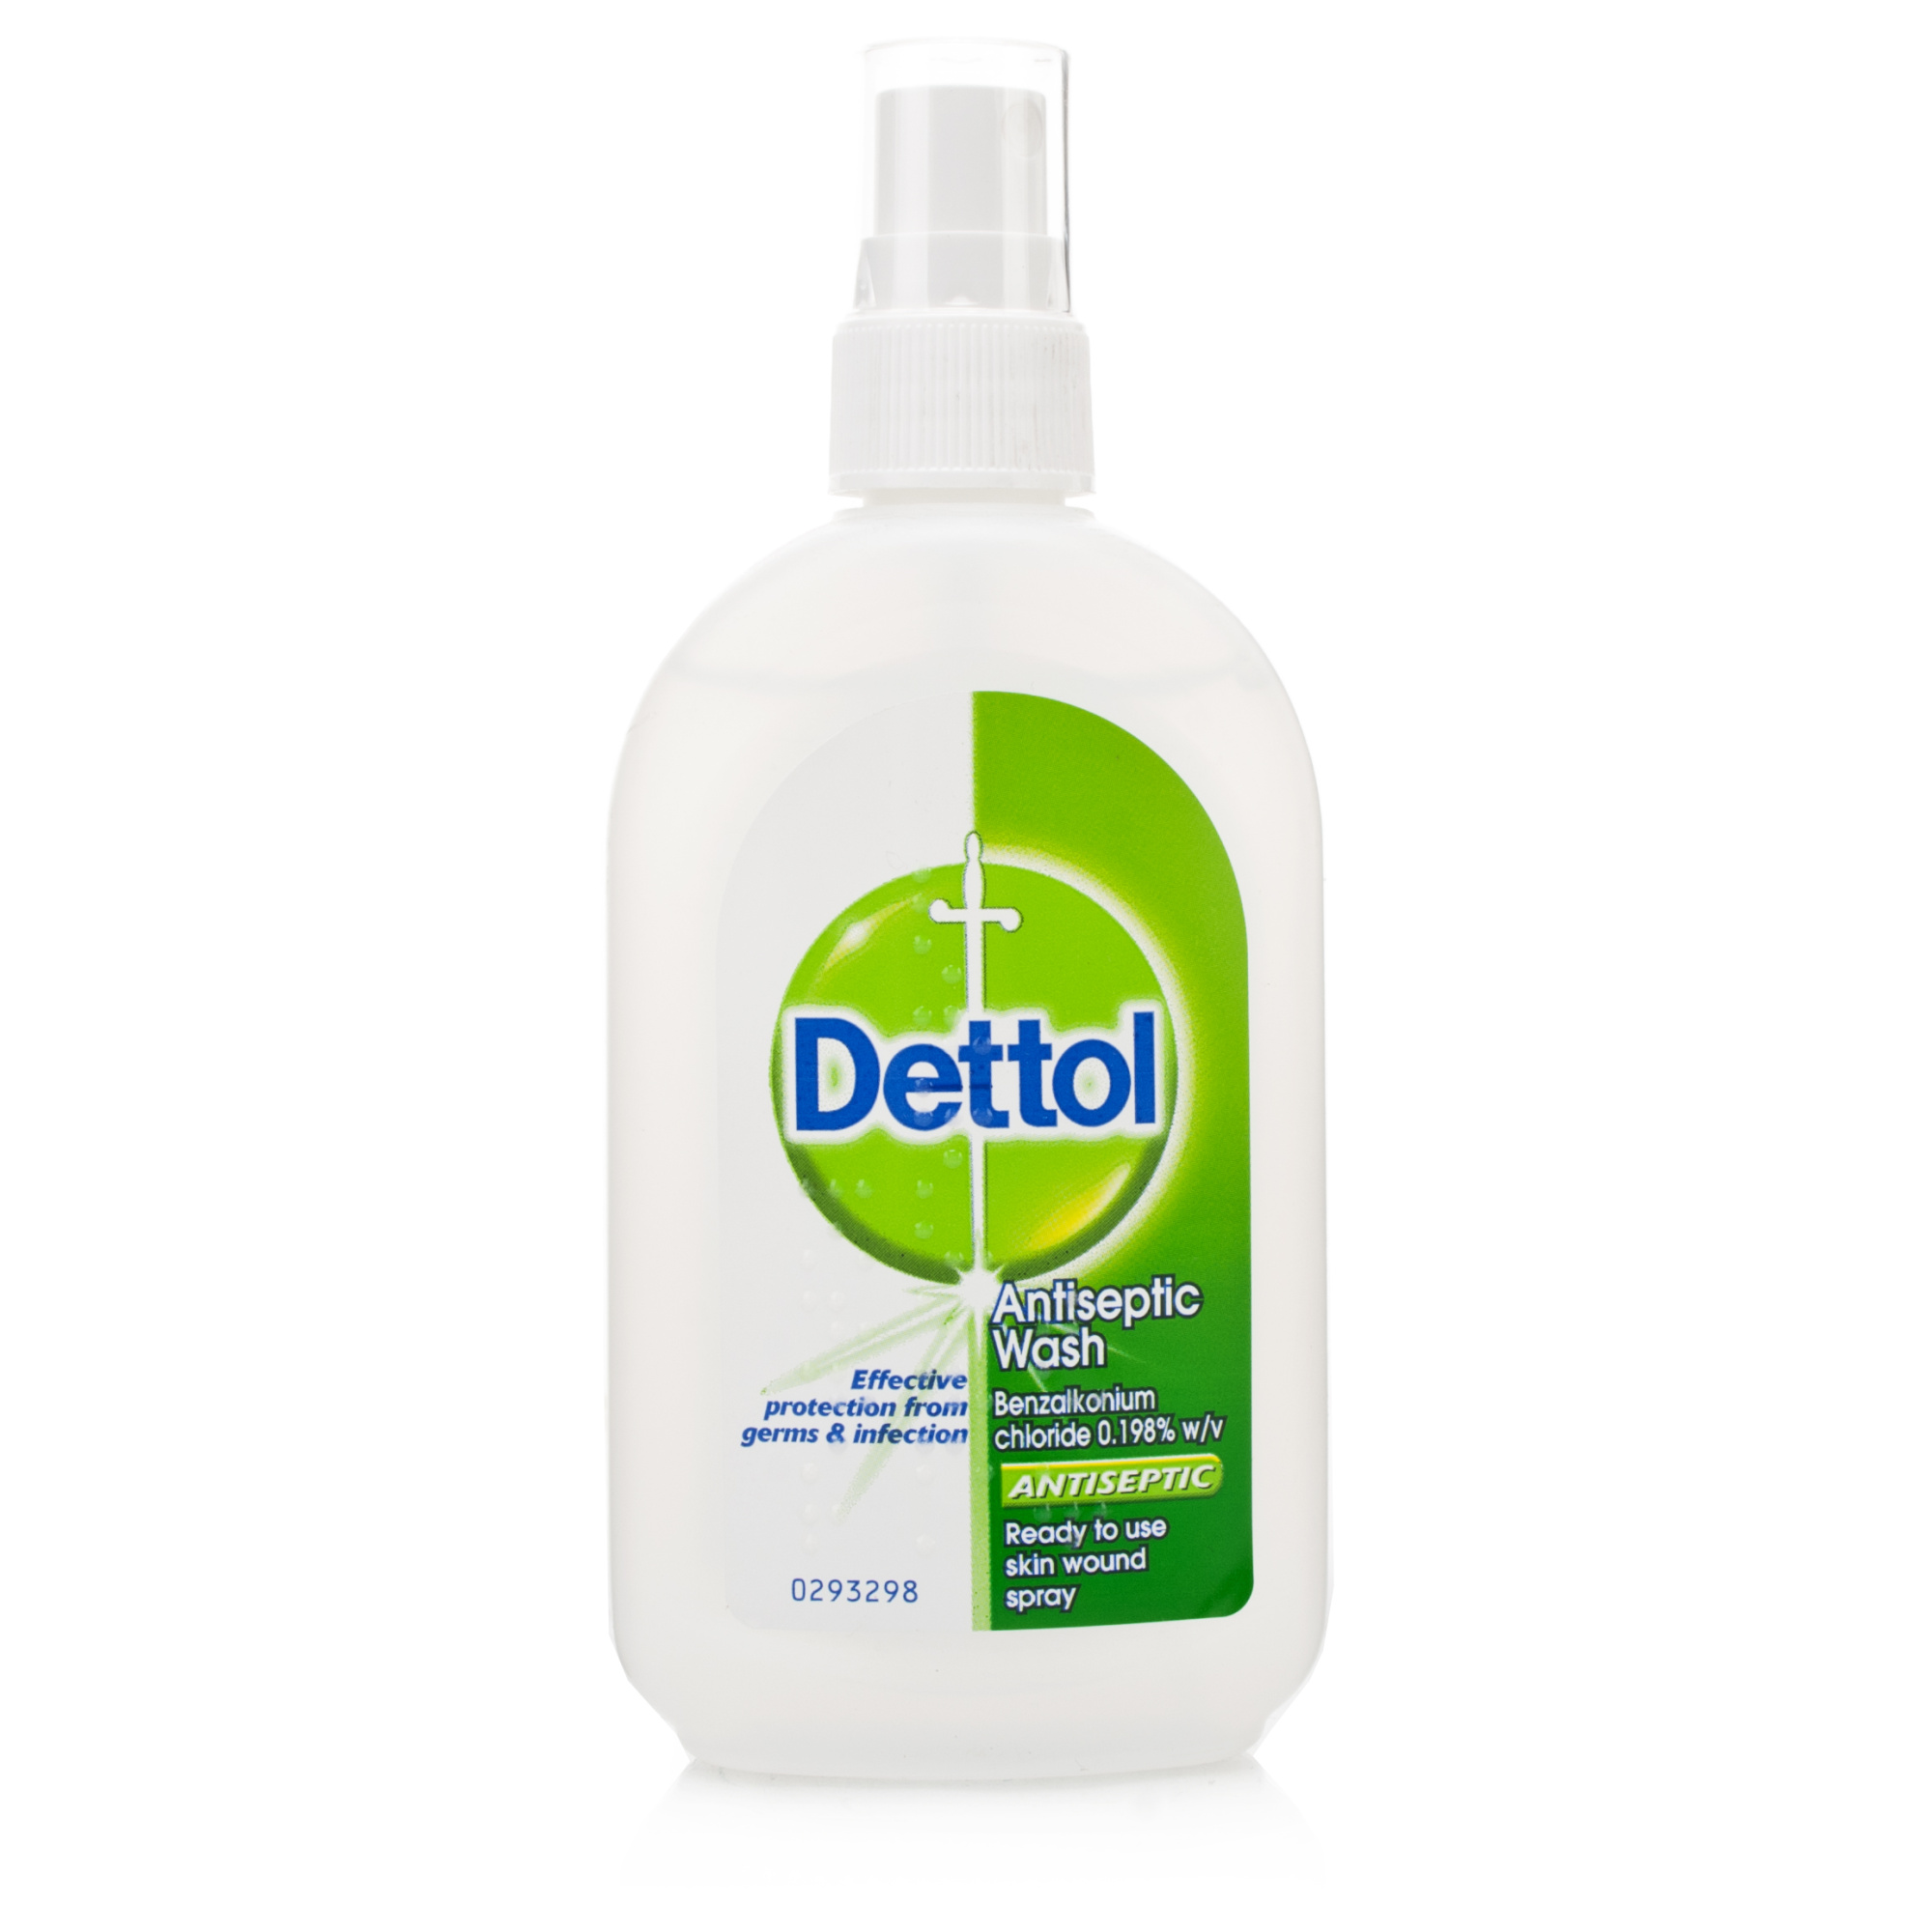 Dettol Antiseptic Wash Spray Medicines £2 49 Chemist Direct